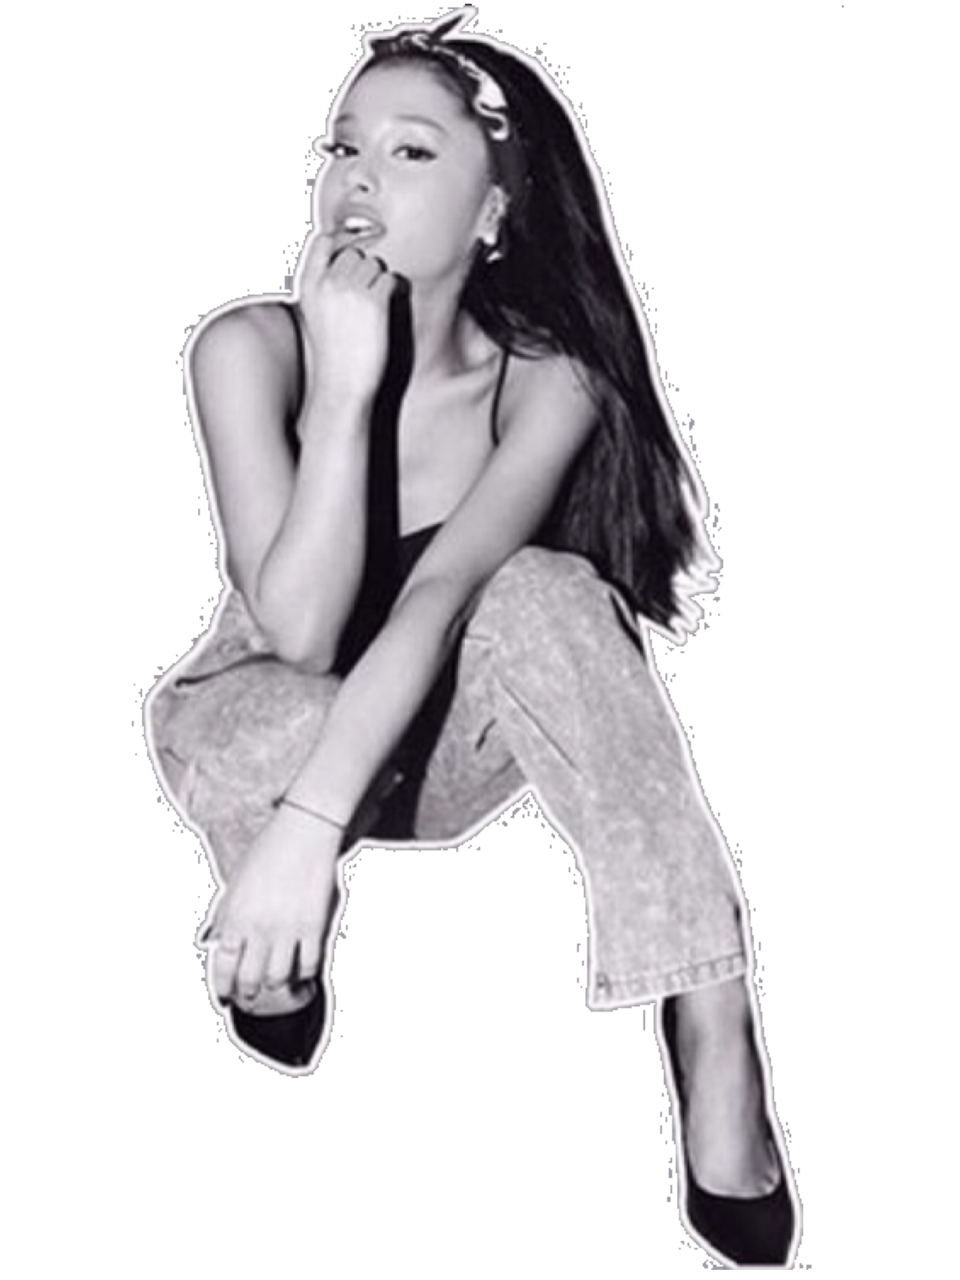 Ariana Grande Sitting Black and White PNG Images pngteam.com